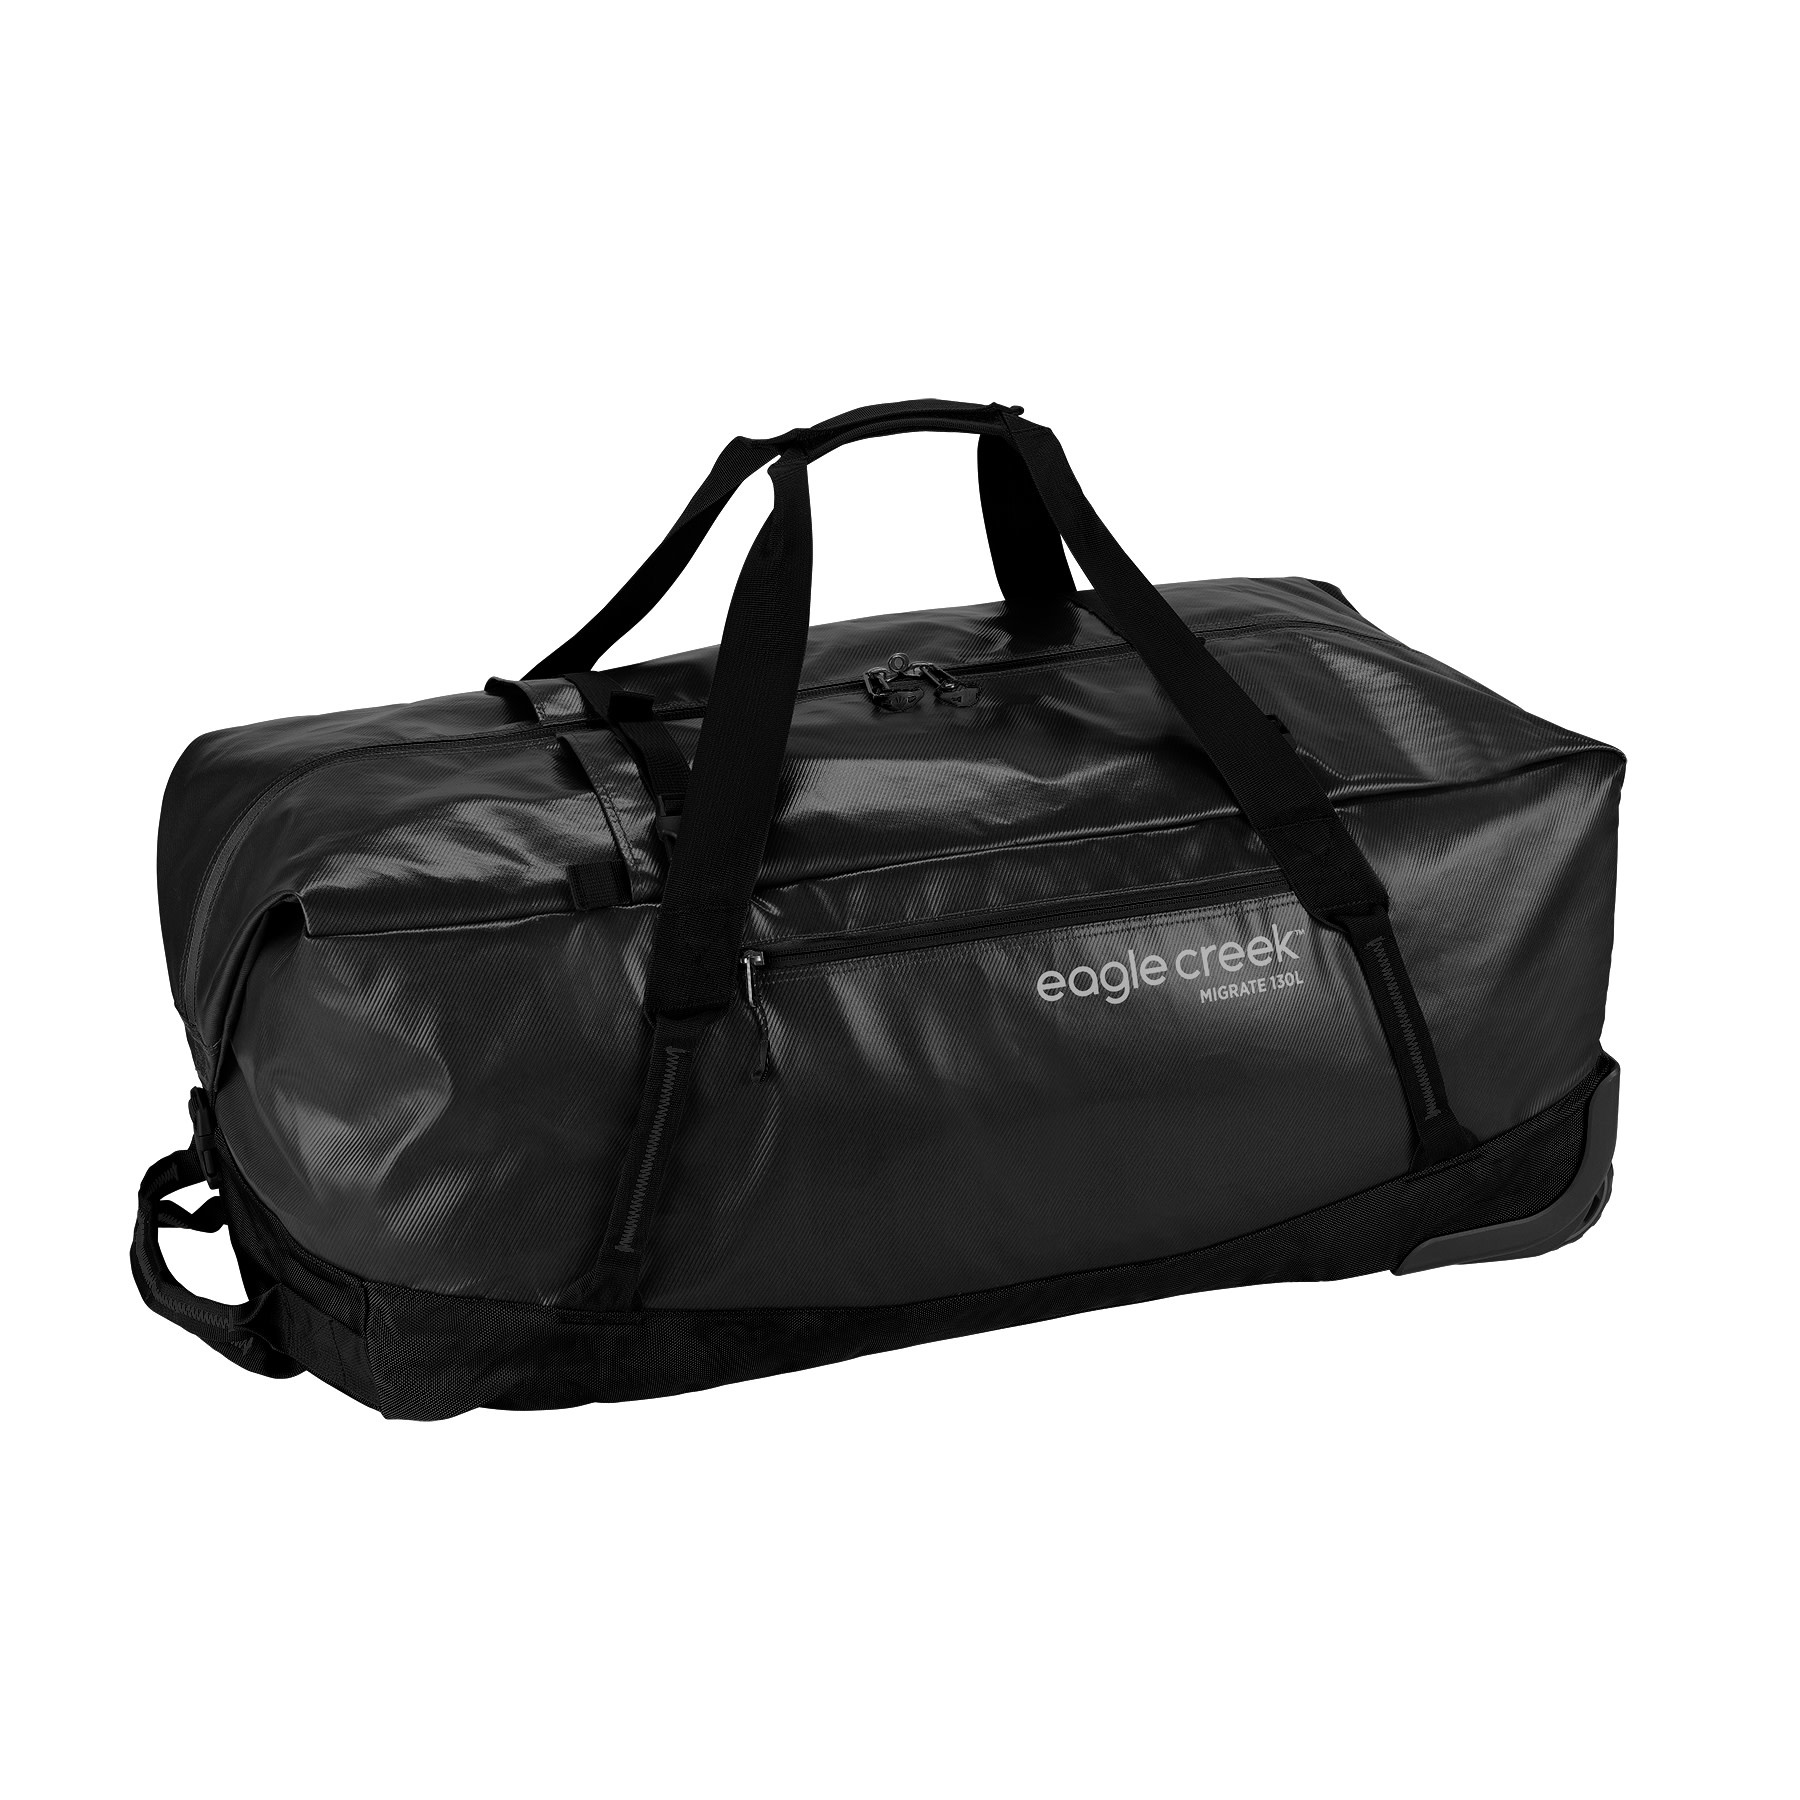 Eagle Creek Migrate Wheeled Duffel 130L- Black - Just Bags Luggage